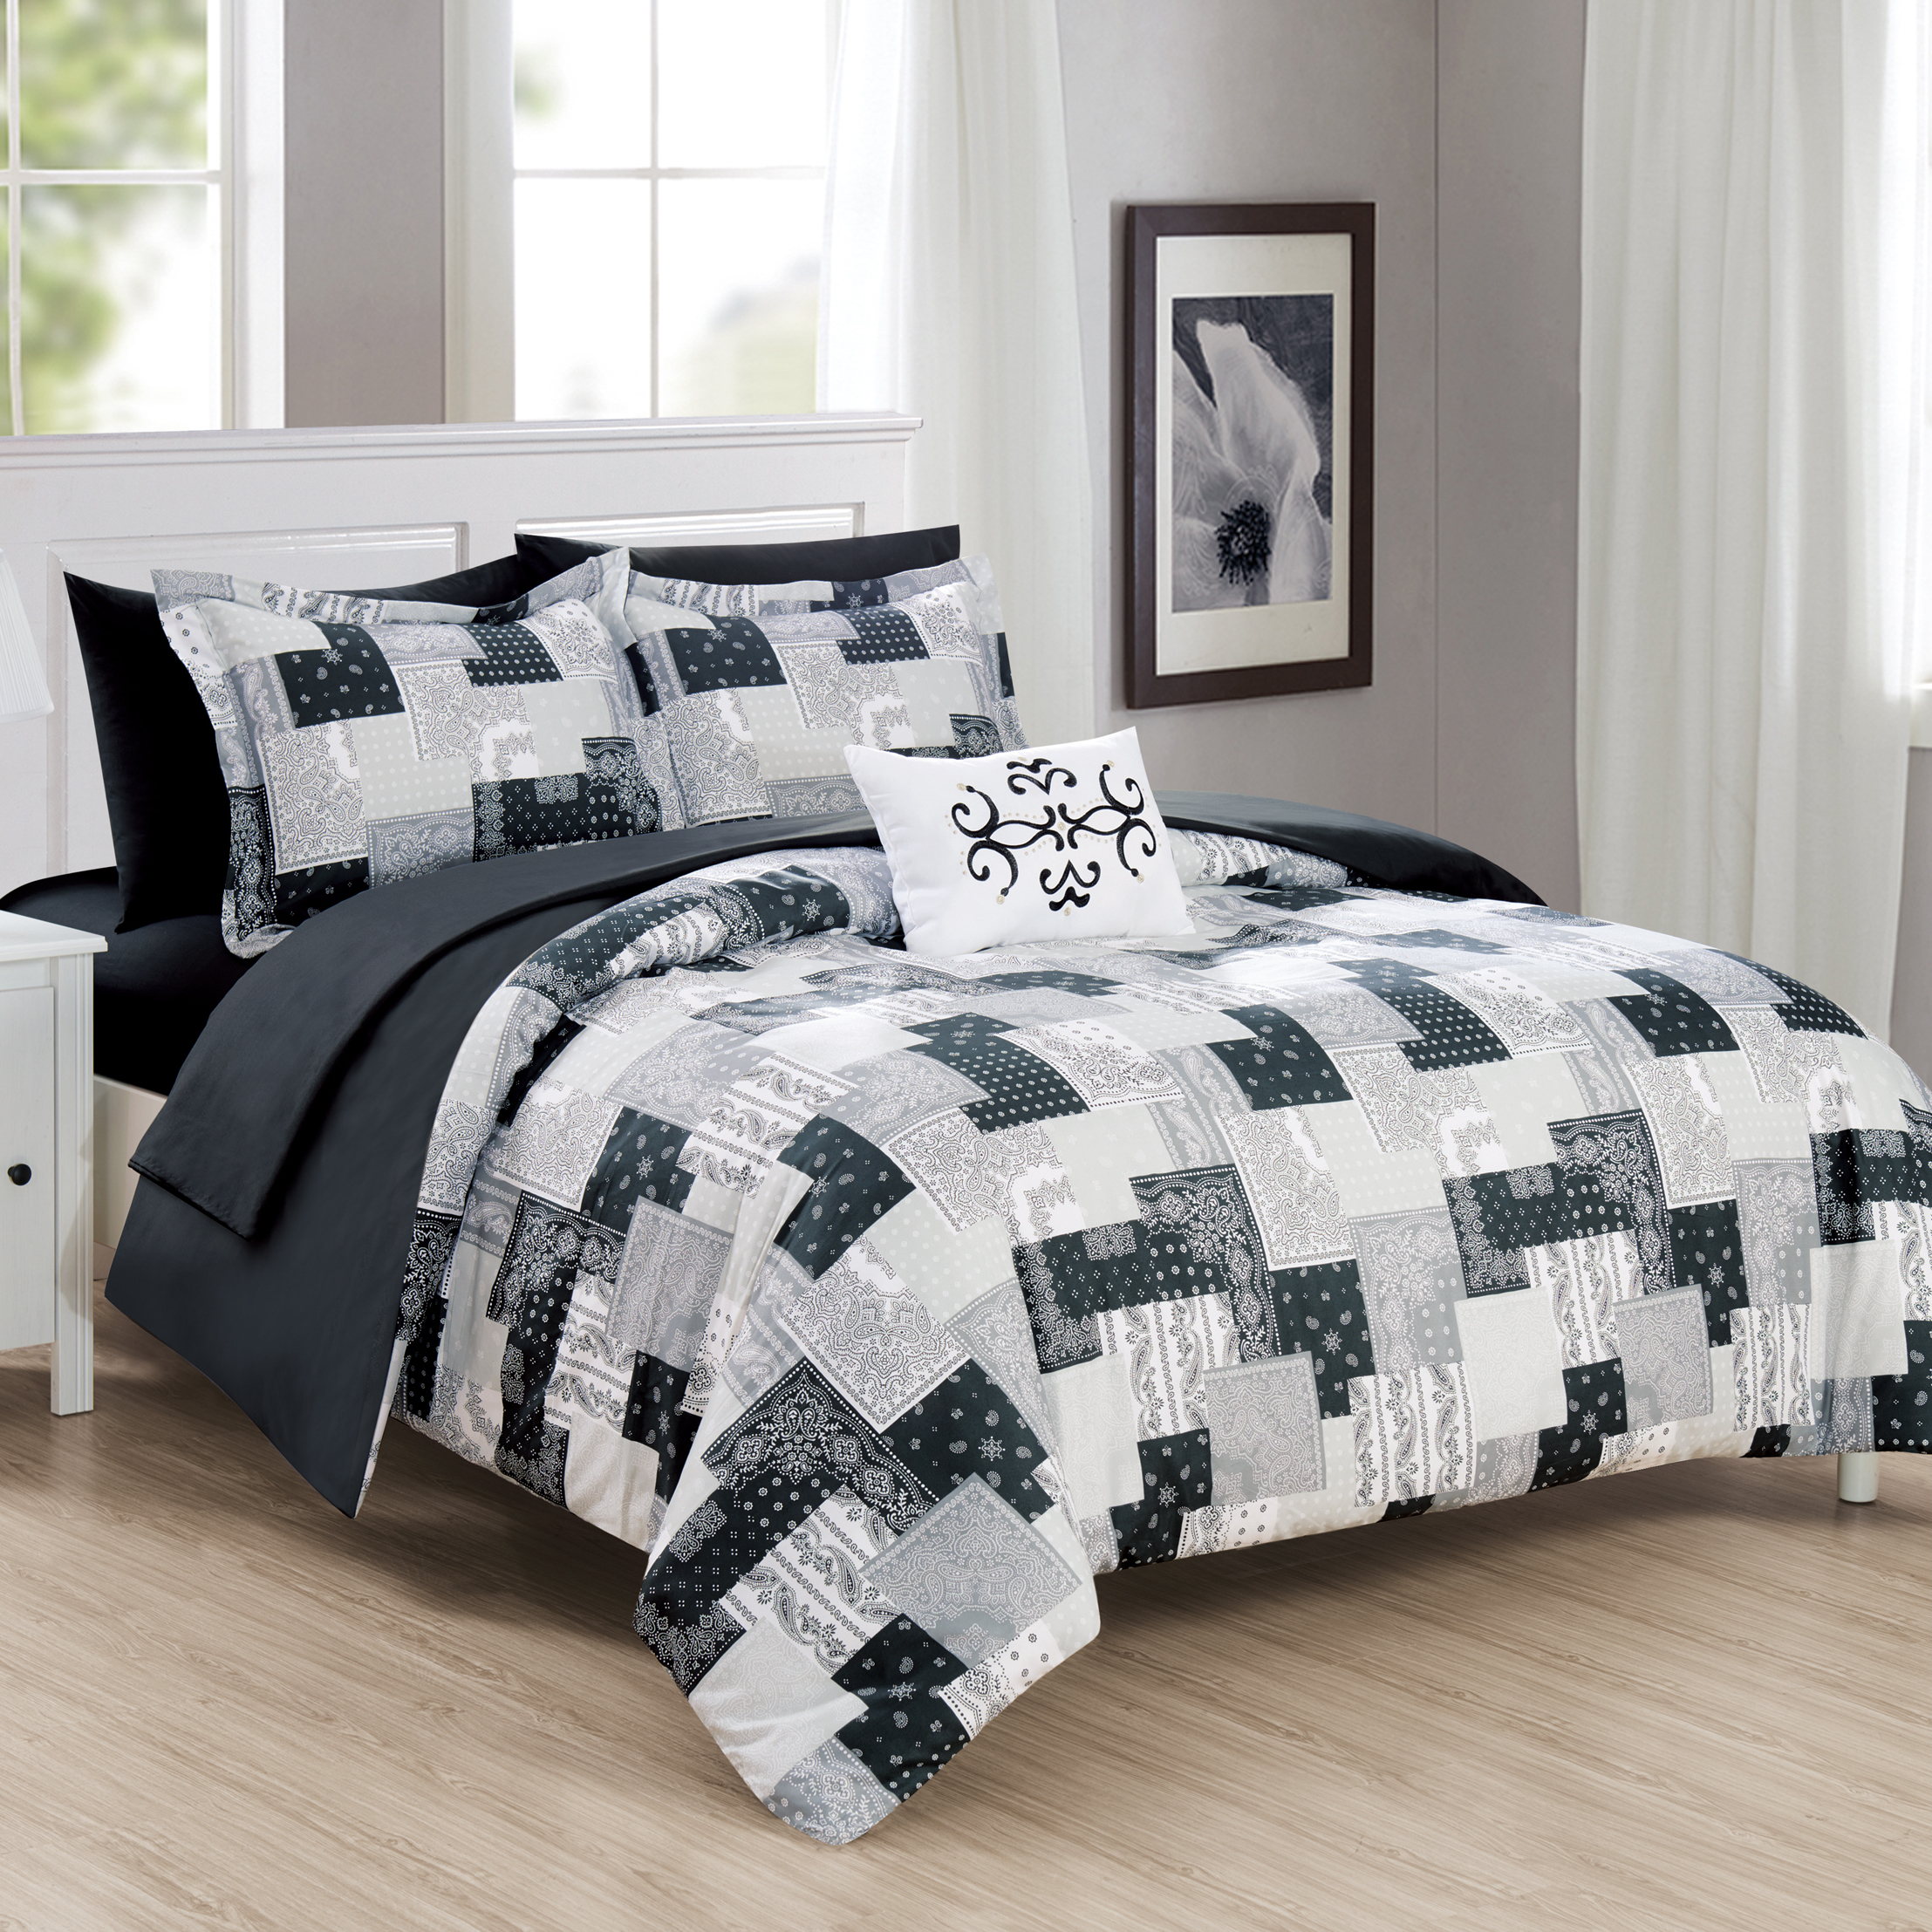 Dei 8 Or 6 Piece Reversible Comforter Set Patchwork Bohemian Paisley Print Design Bed In A Bag - Black, Queen